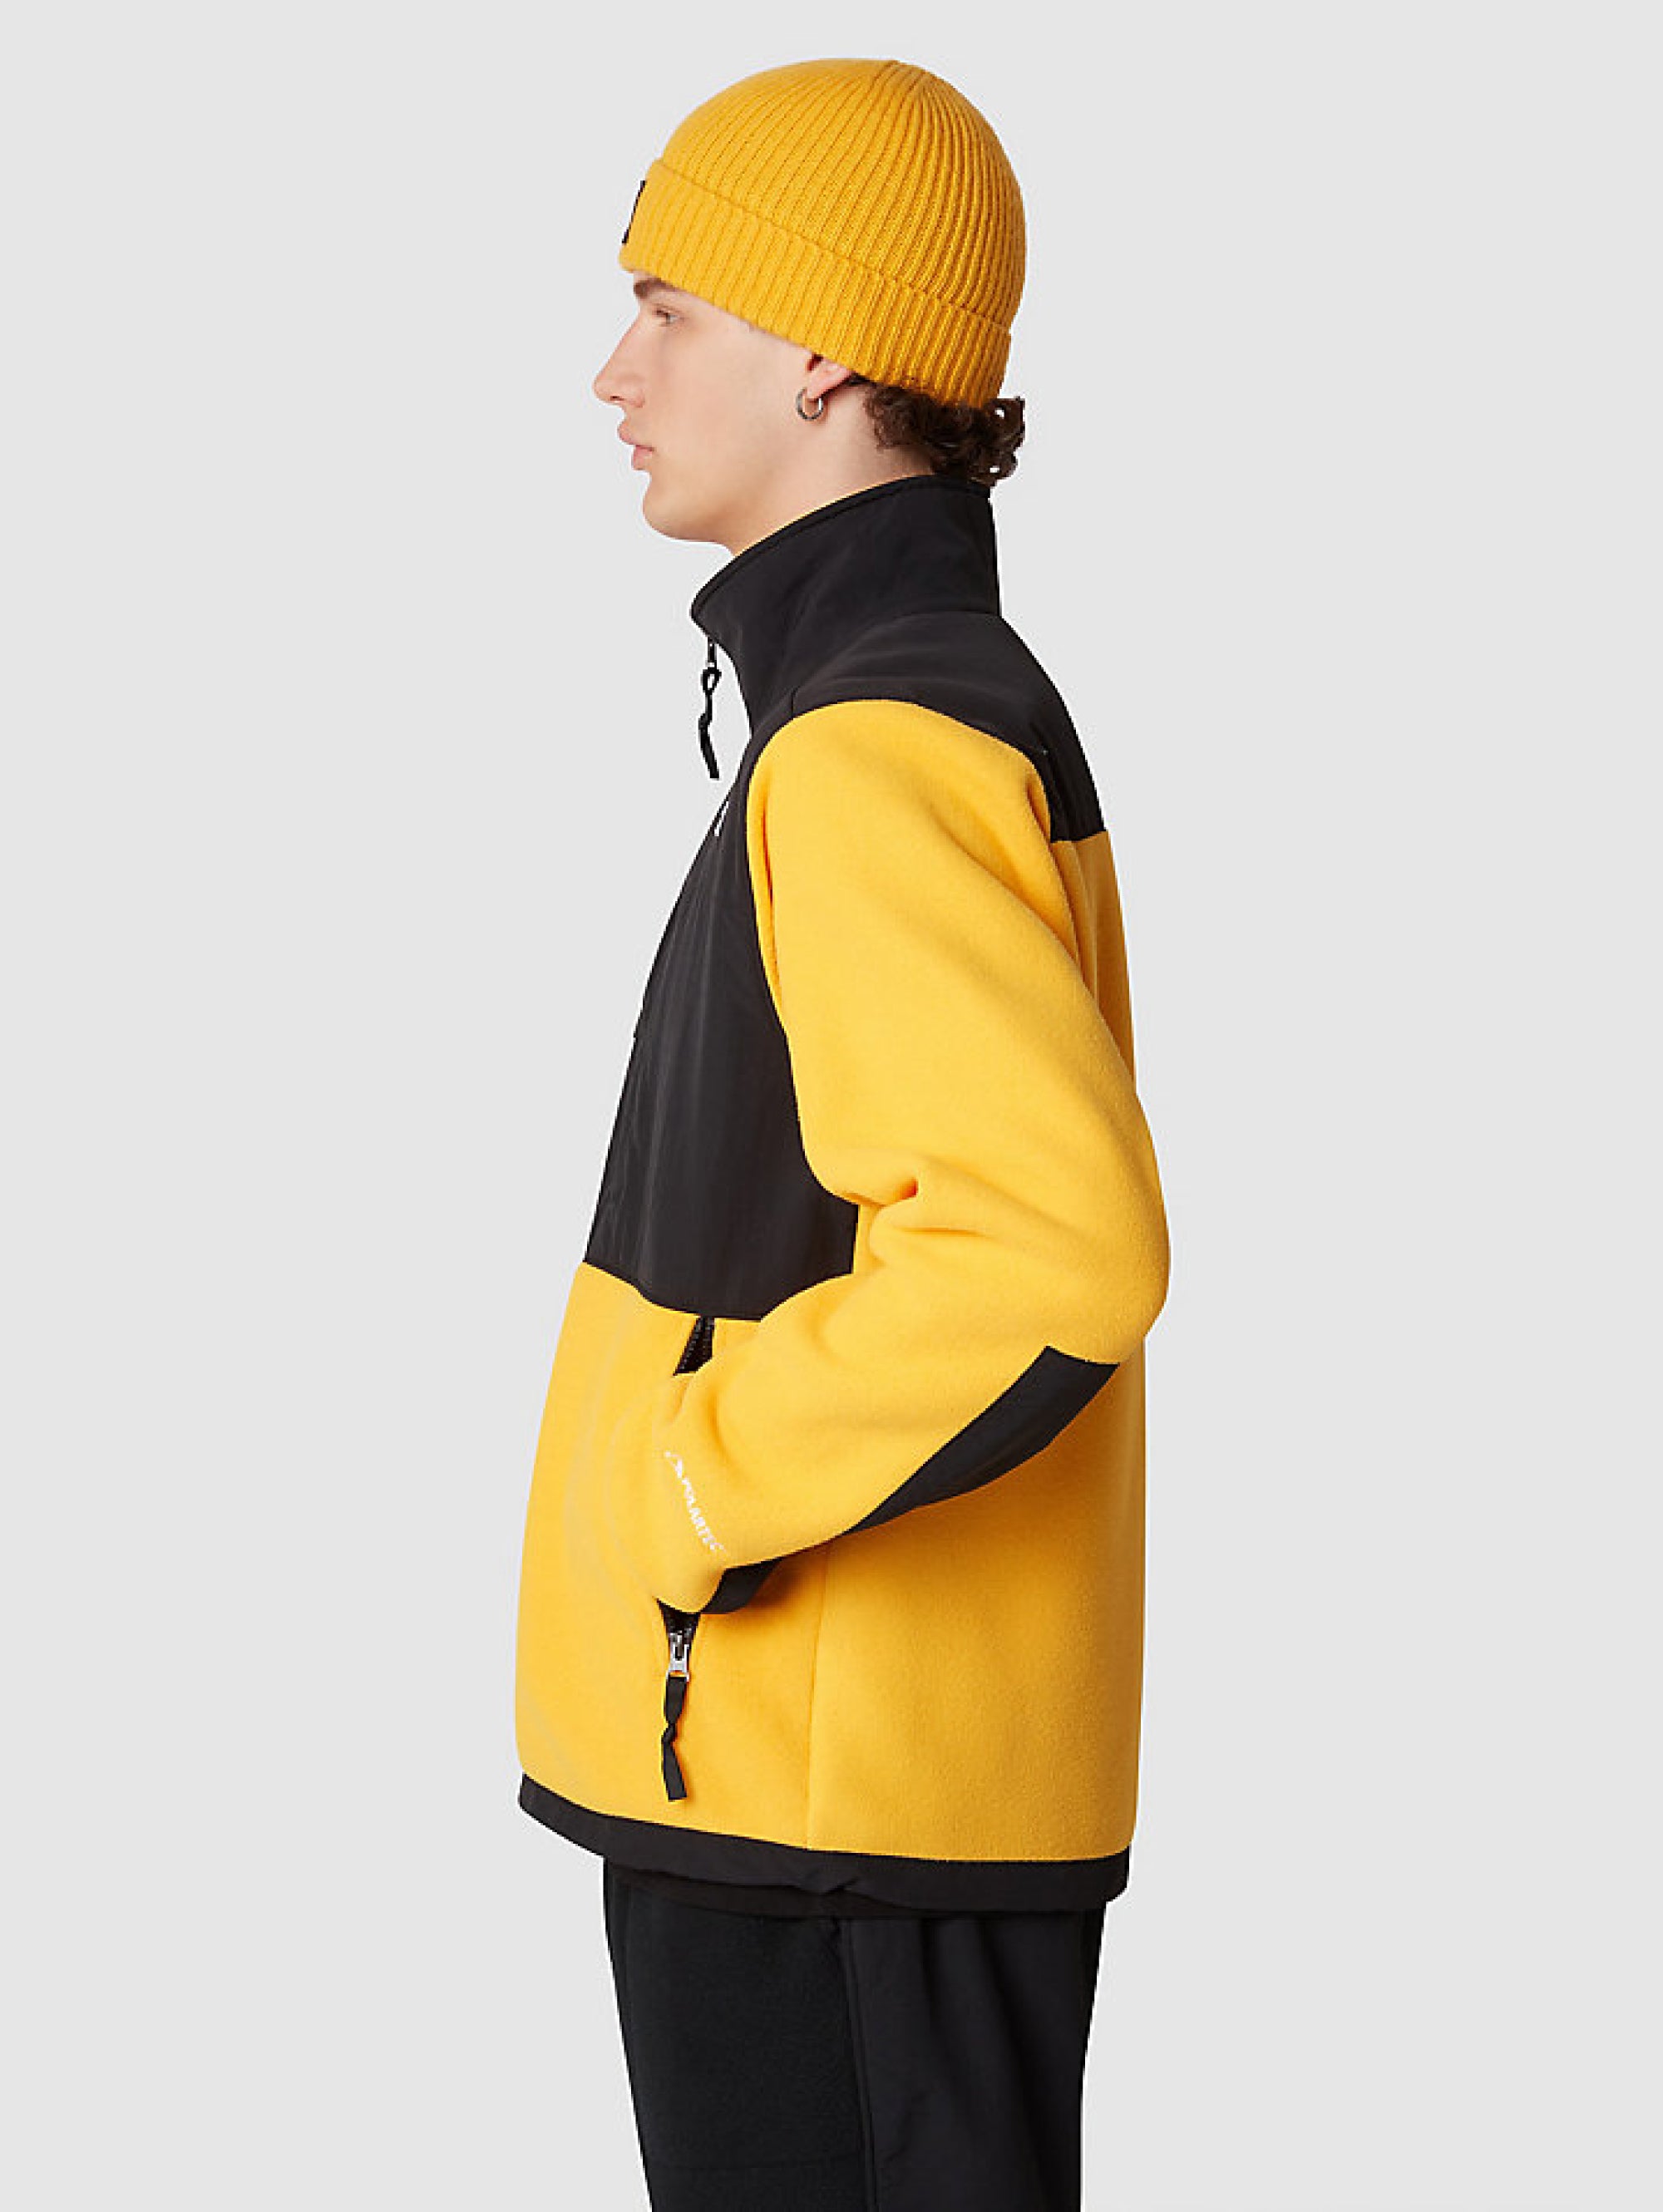 Denali Jacket in Recycled Polartec Fleece Yellow/Black